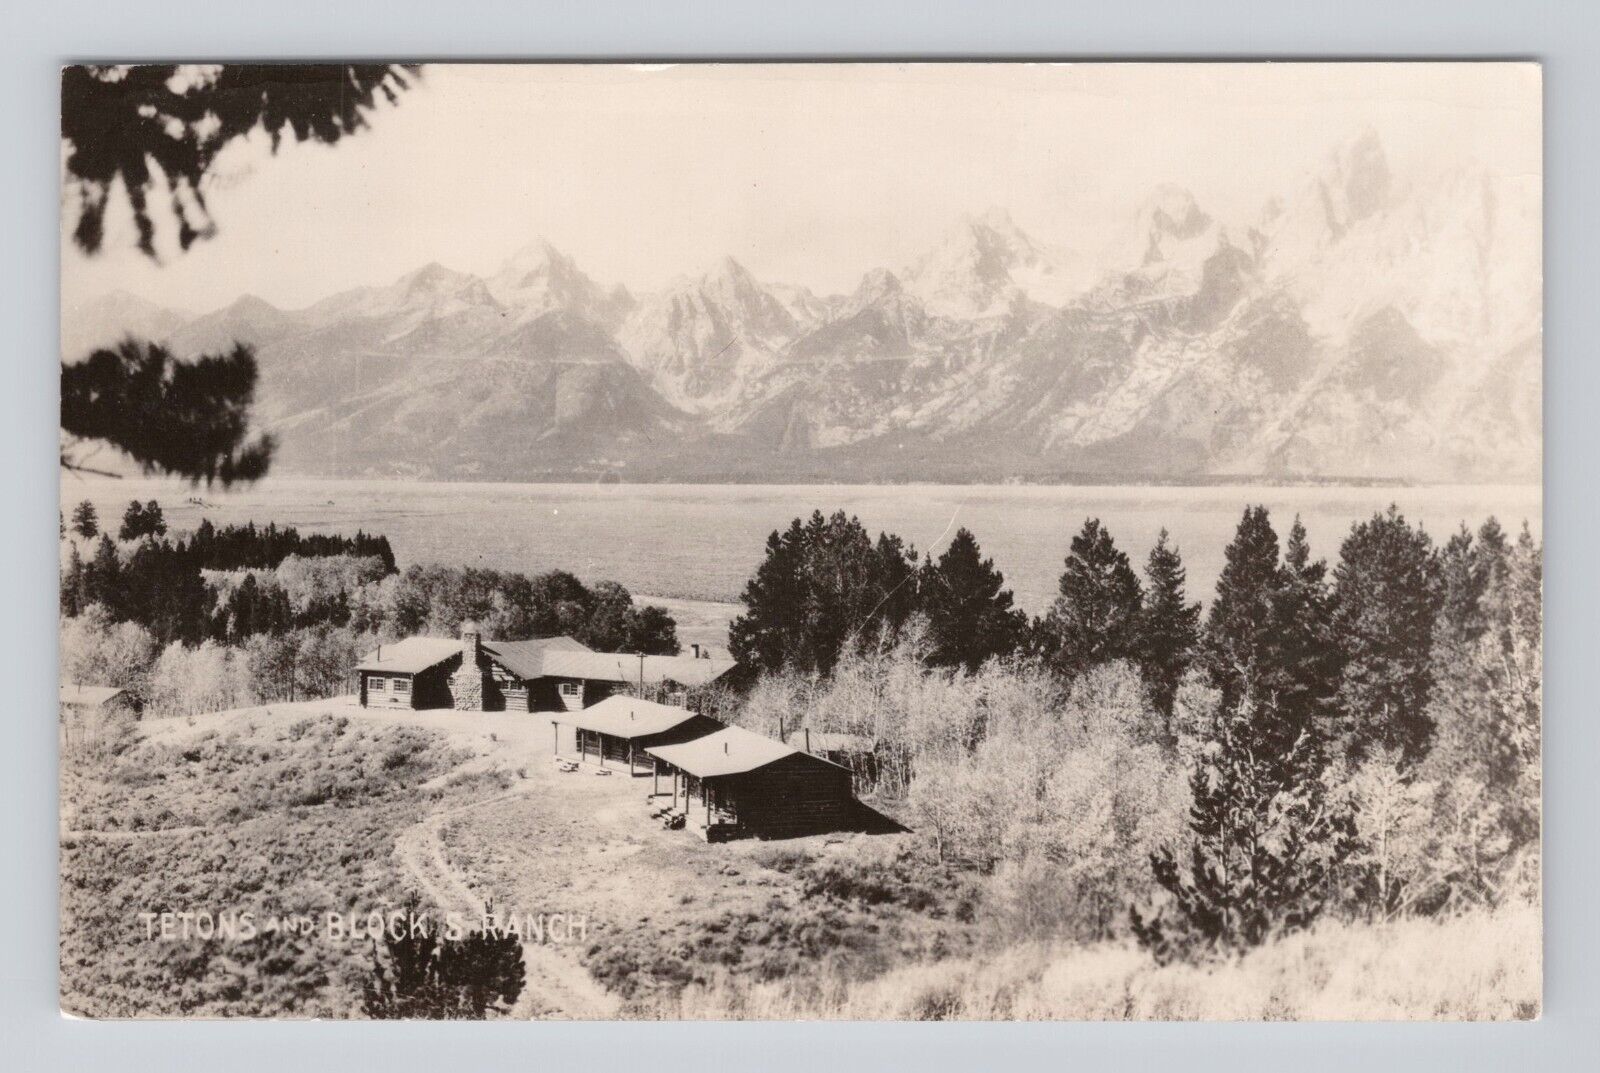 Postcard RPPC Tetons and Block S Ranch Jackson Wyoming Grand Teton National Park